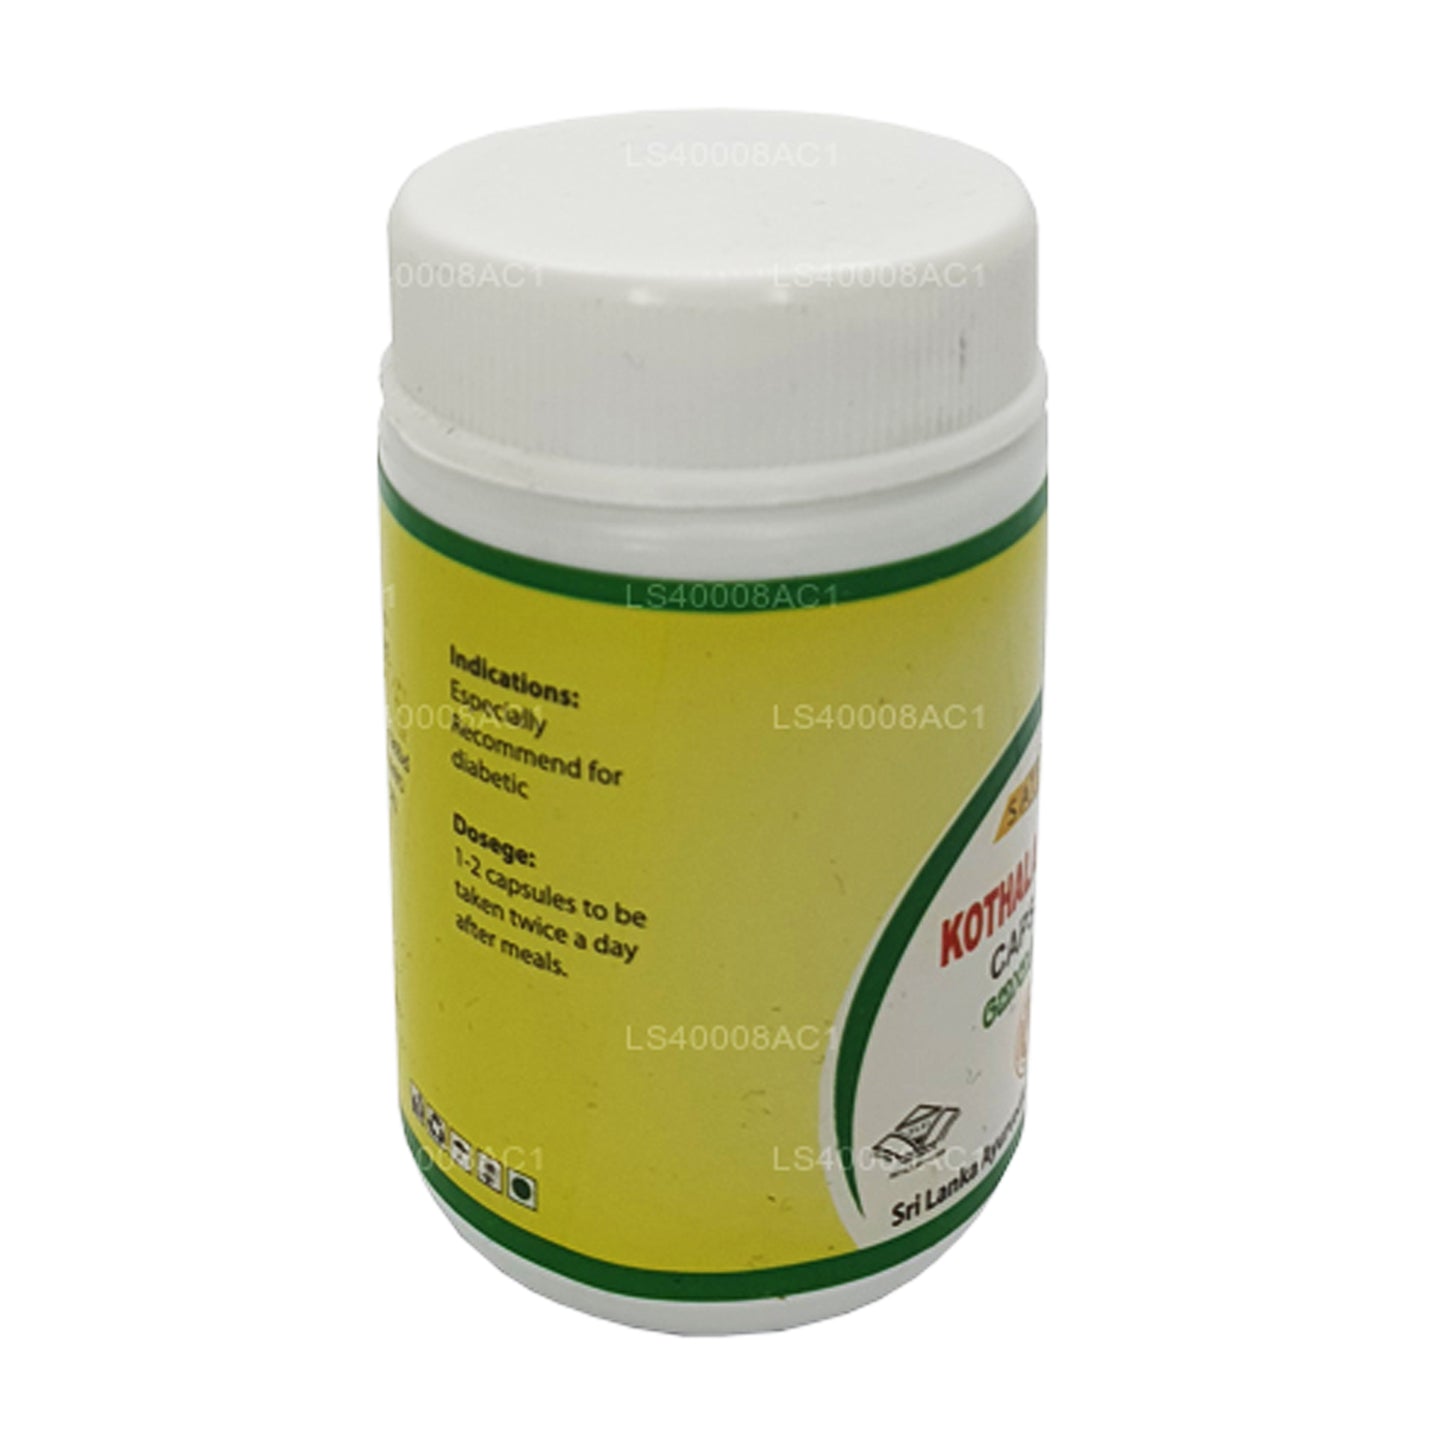 SLADC Kothala Himbutu (300 mg x 60 cápsulas)